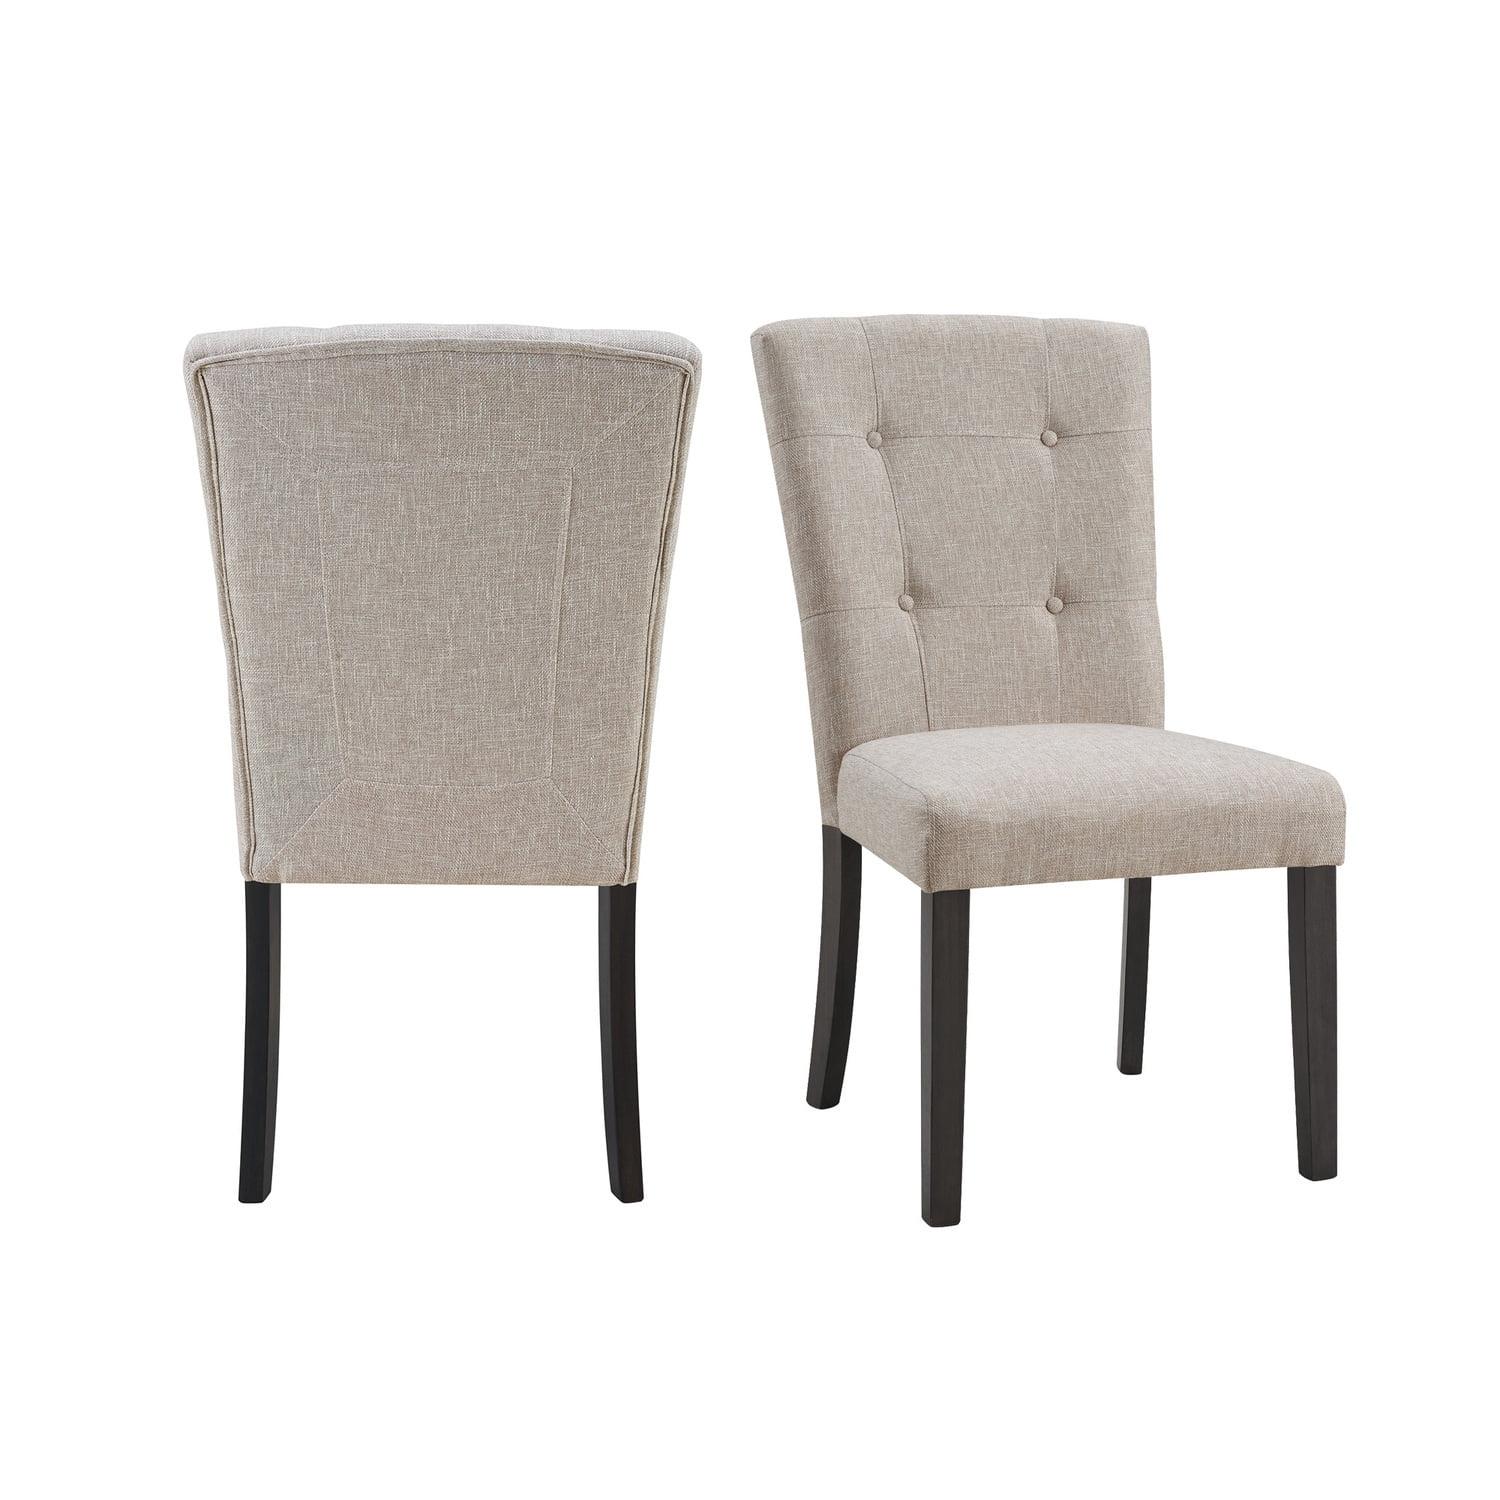 Beige Linen Upholstered Tufted Side Chair Set